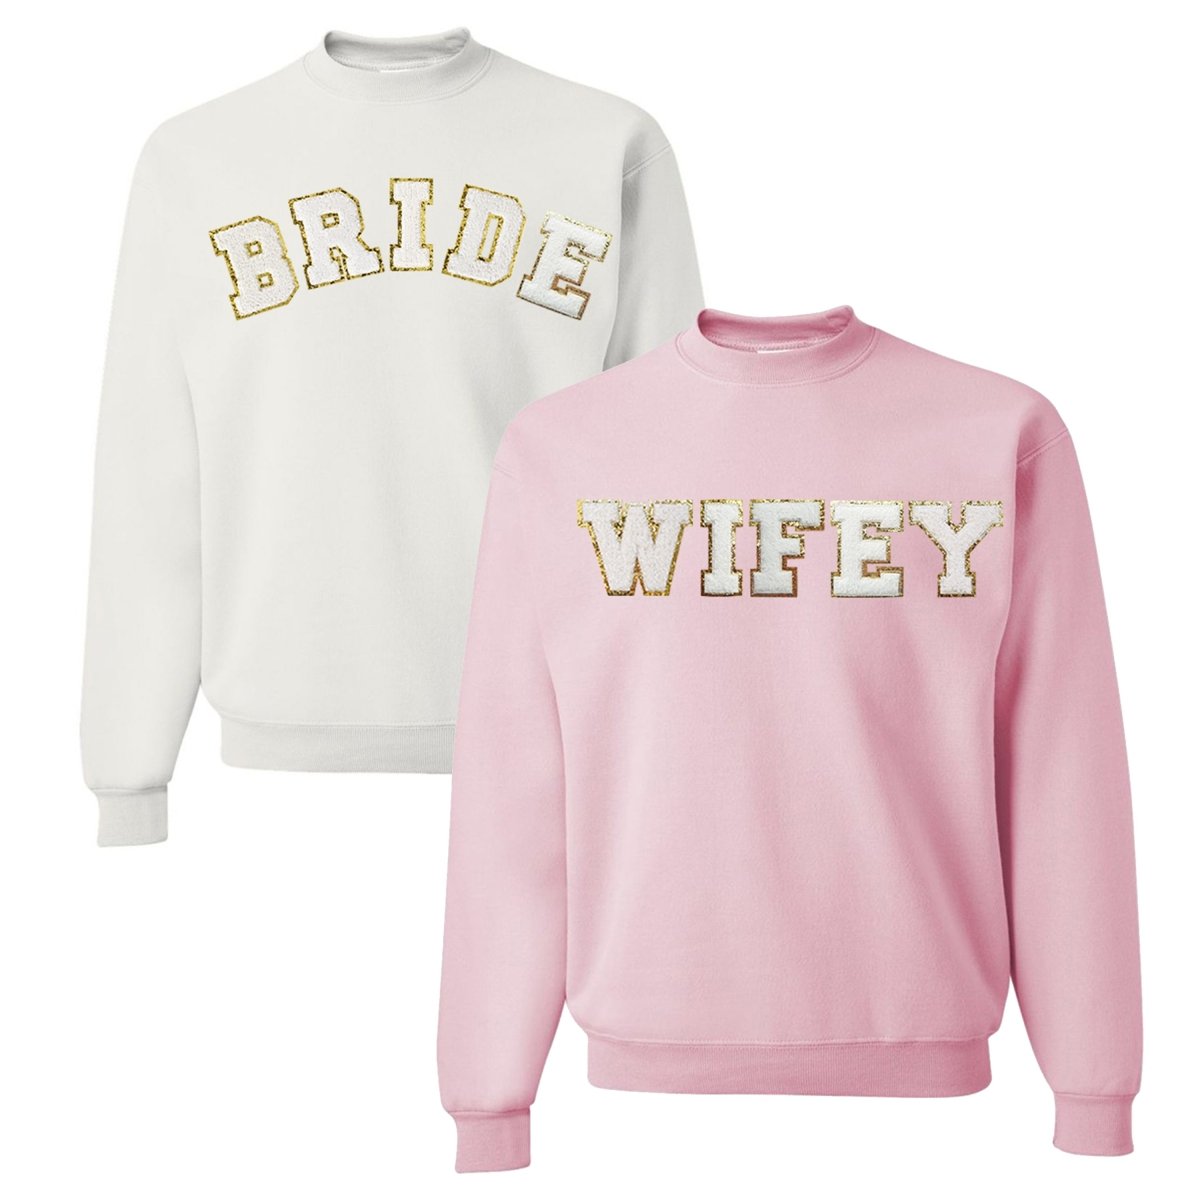 Wifey/Bride Letter Patch Crewneck Sweatshirt - United Monograms